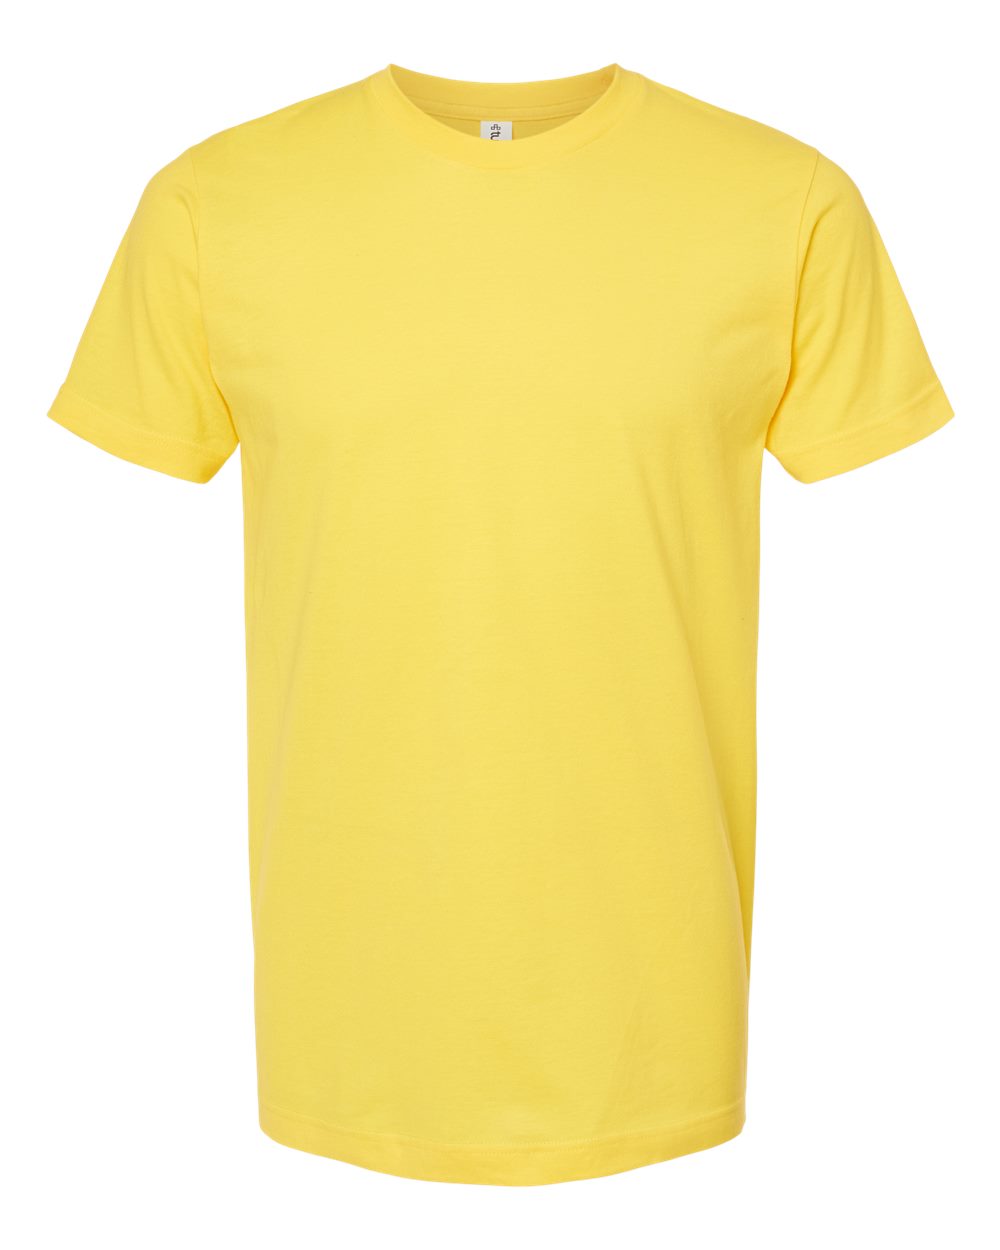 Pretreated Tultex 202 Unisex Fine Jersey T-Shirt - Sunshine